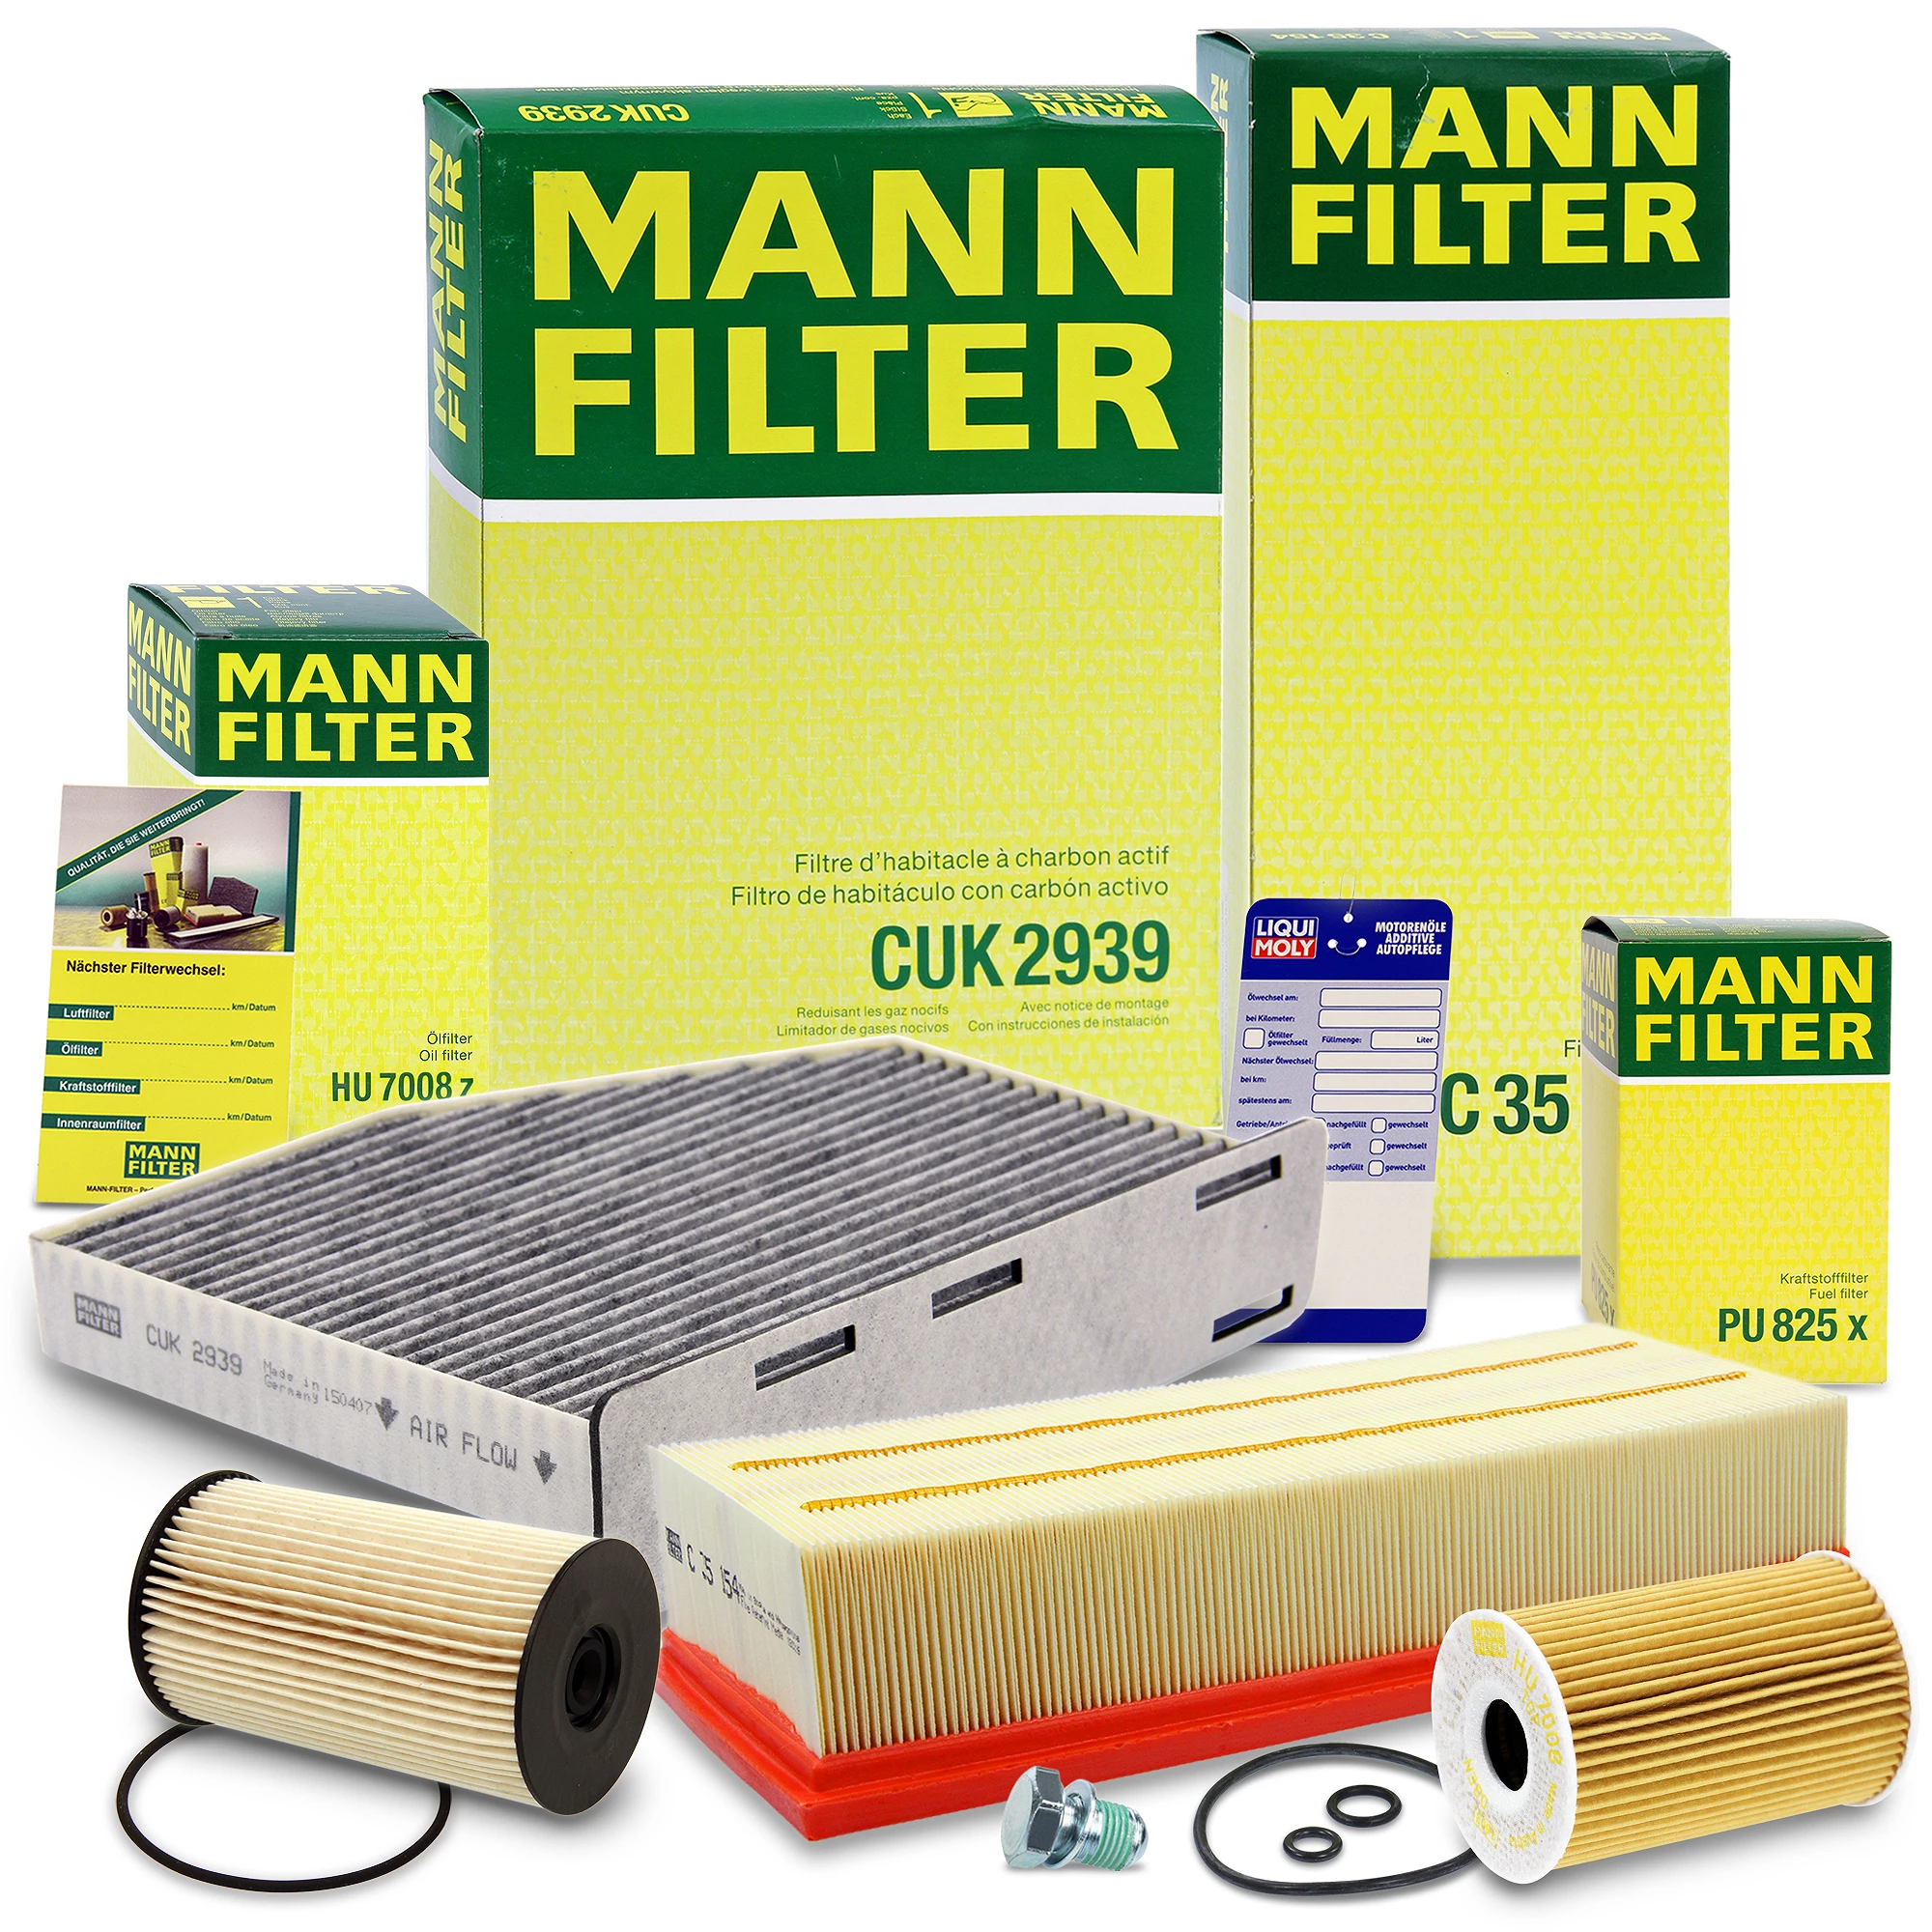 MANN-Filter Set Ölfilter Luftfilter Inspektionspaket MOL-9693988